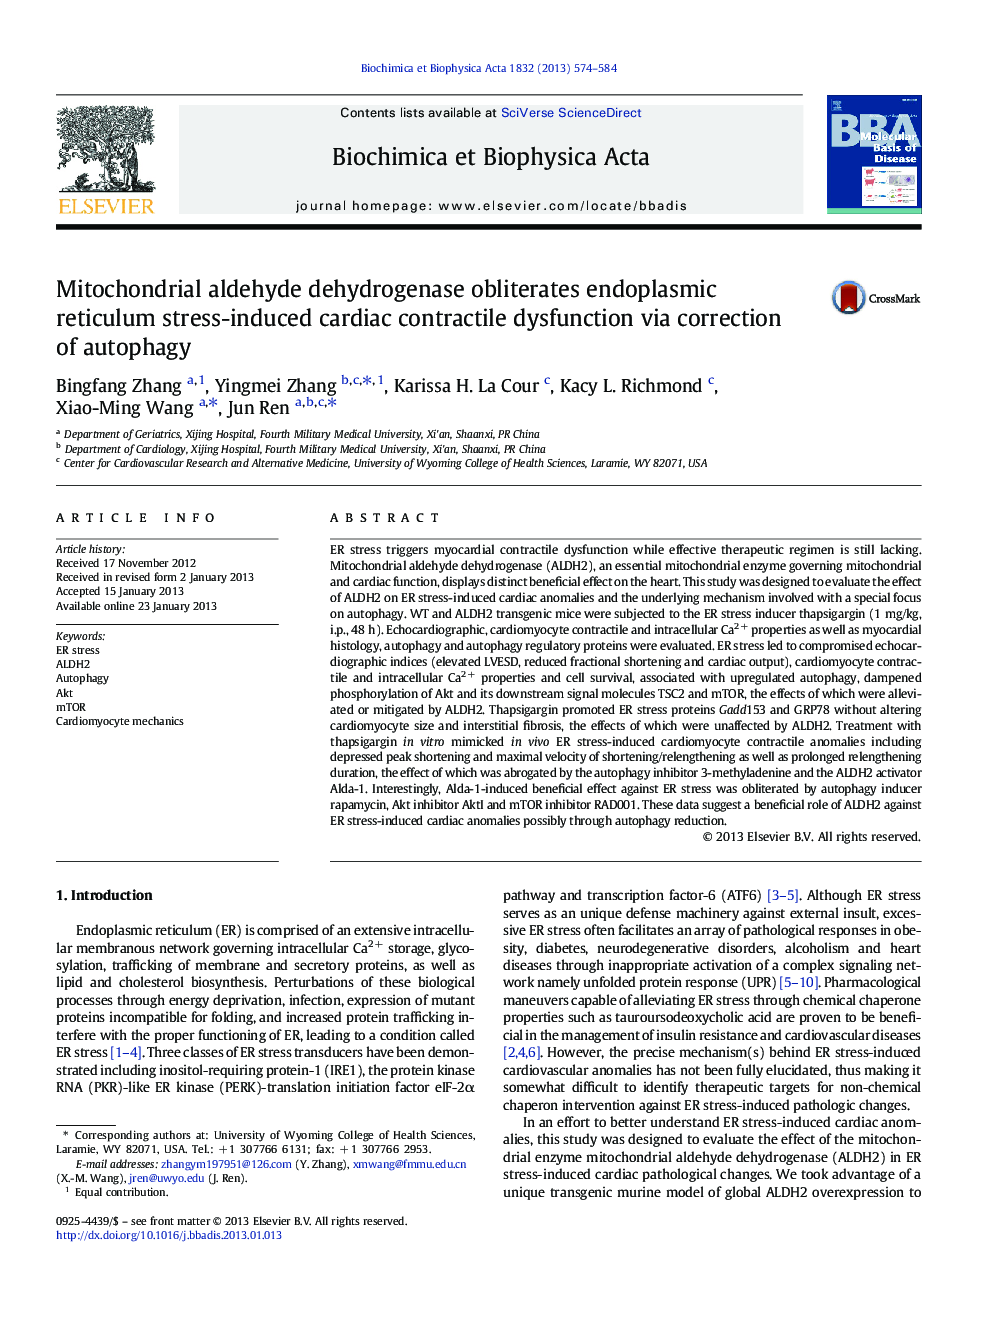 Mitochondrial aldehyde dehydrogenase obliterates endoplasmic reticulum stress-induced cardiac contractile dysfunction via correction of autophagy